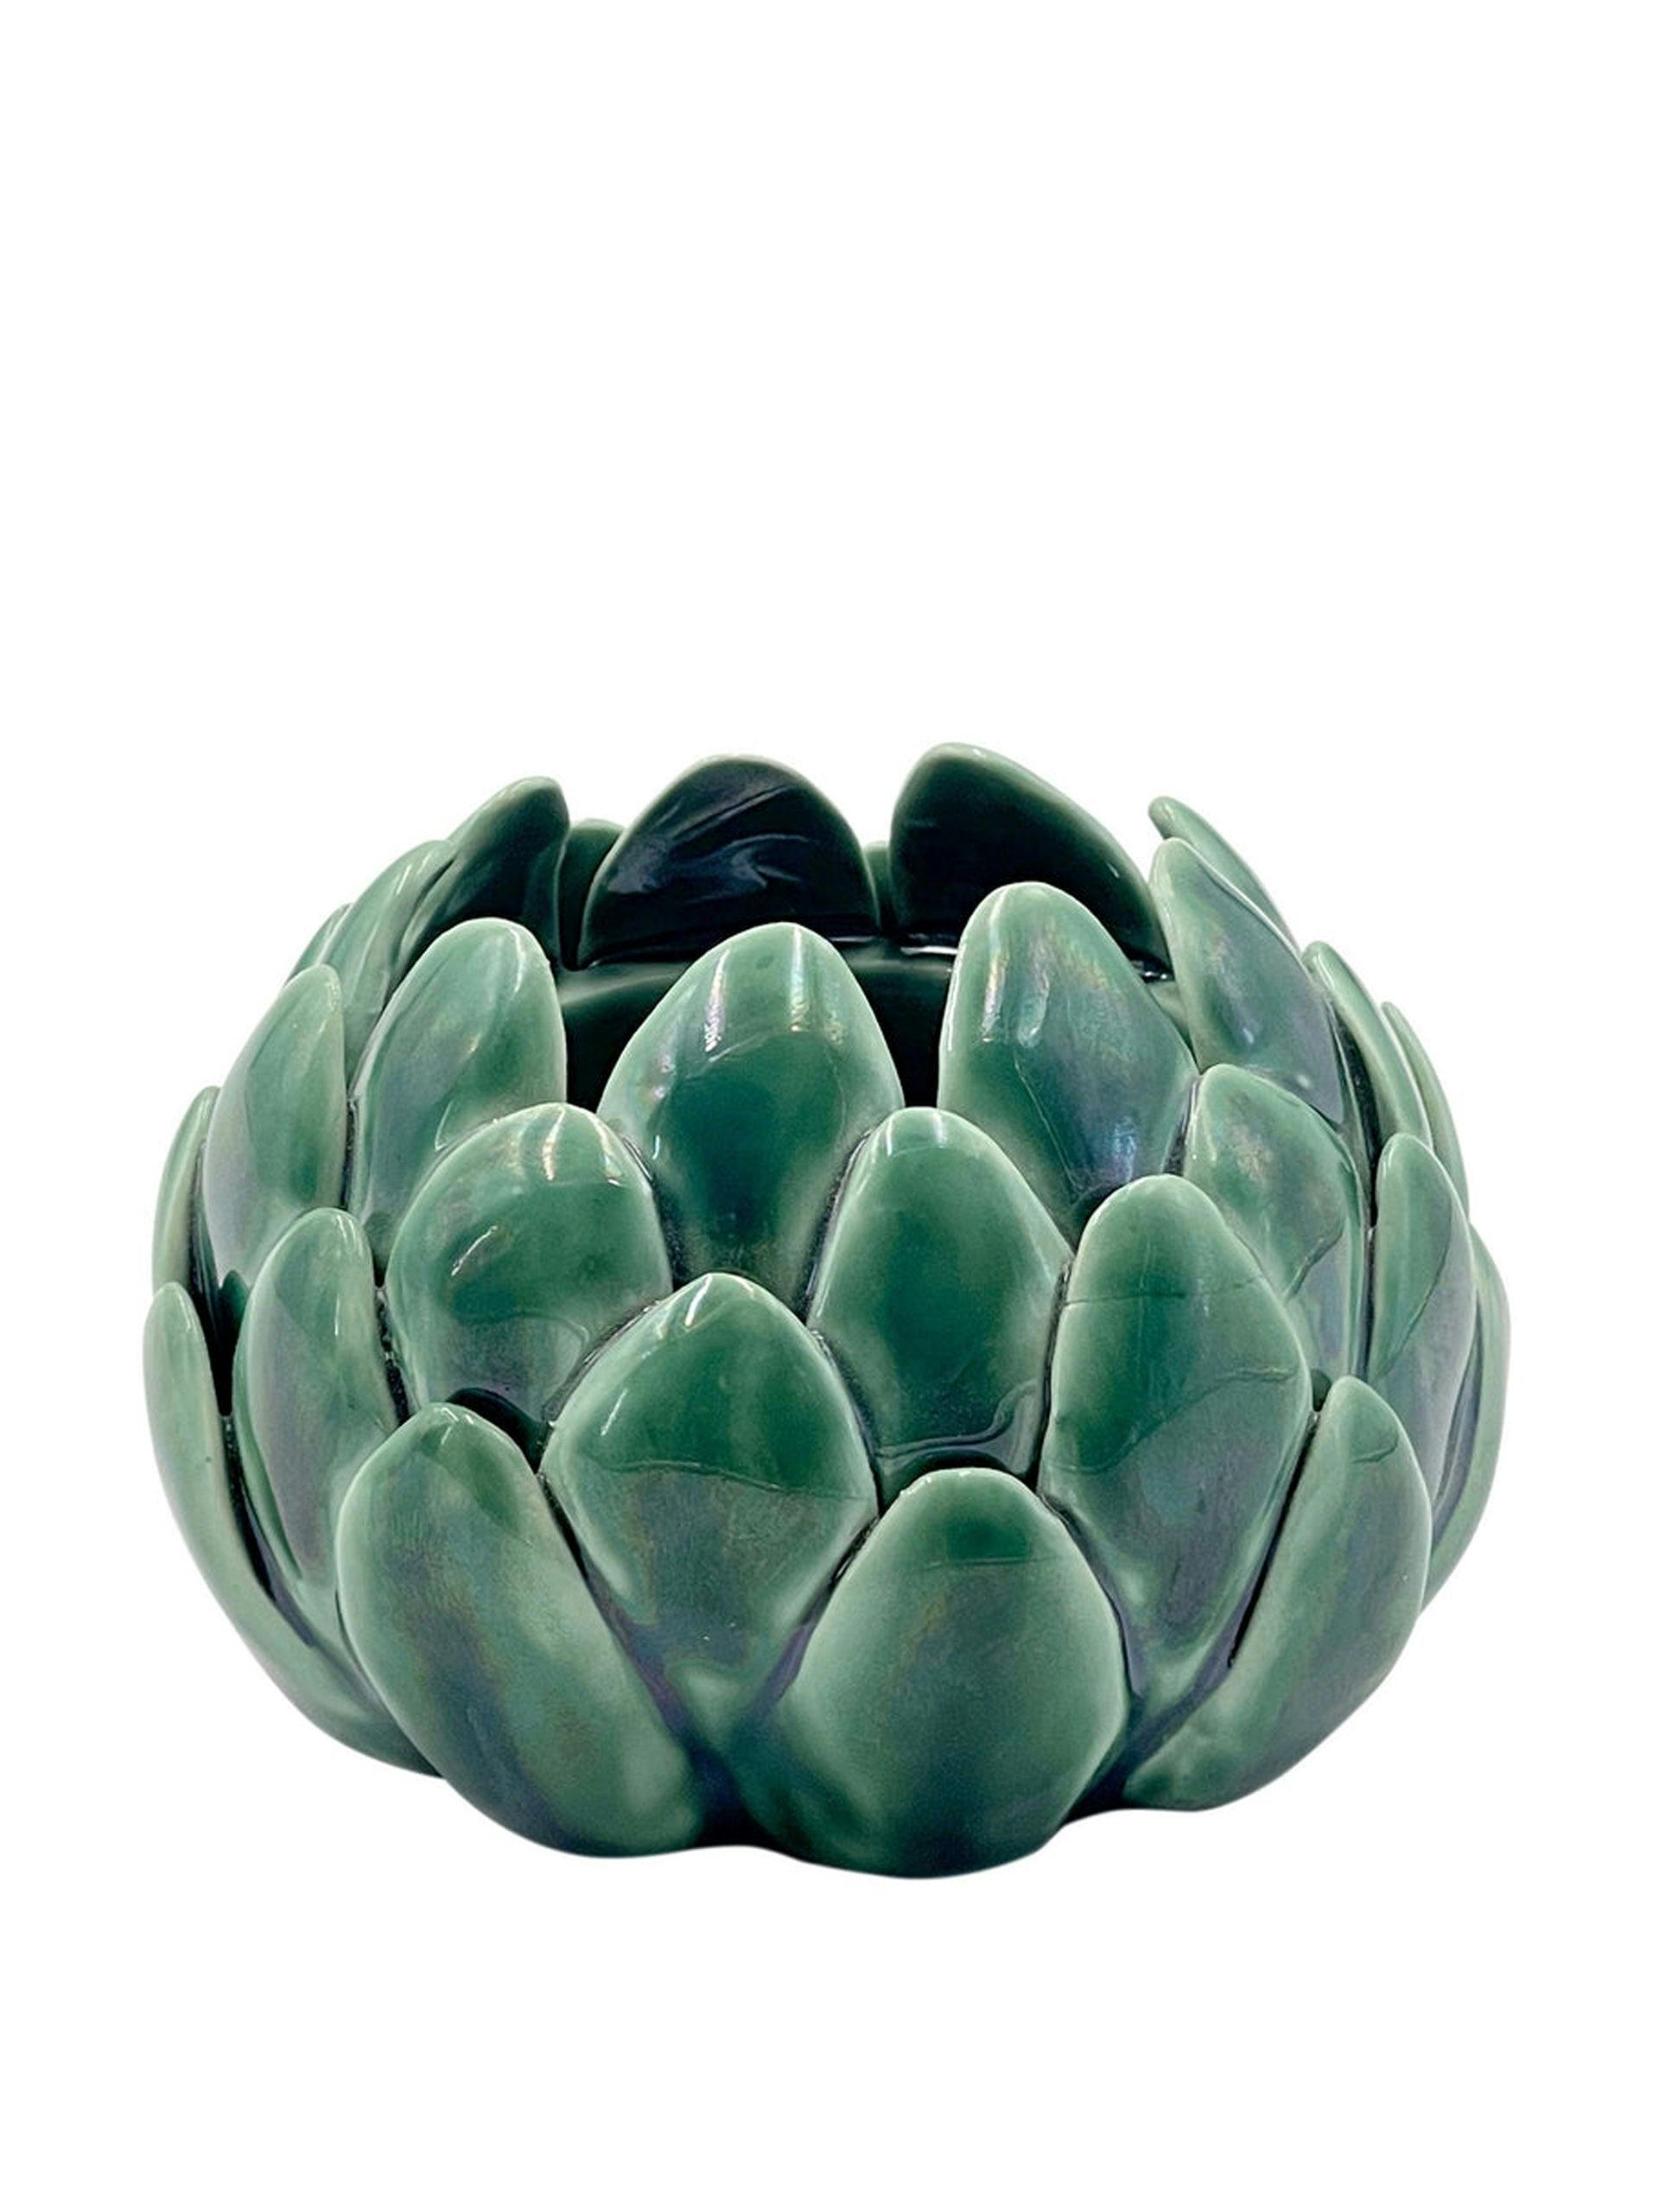 Small green artichoke bowl